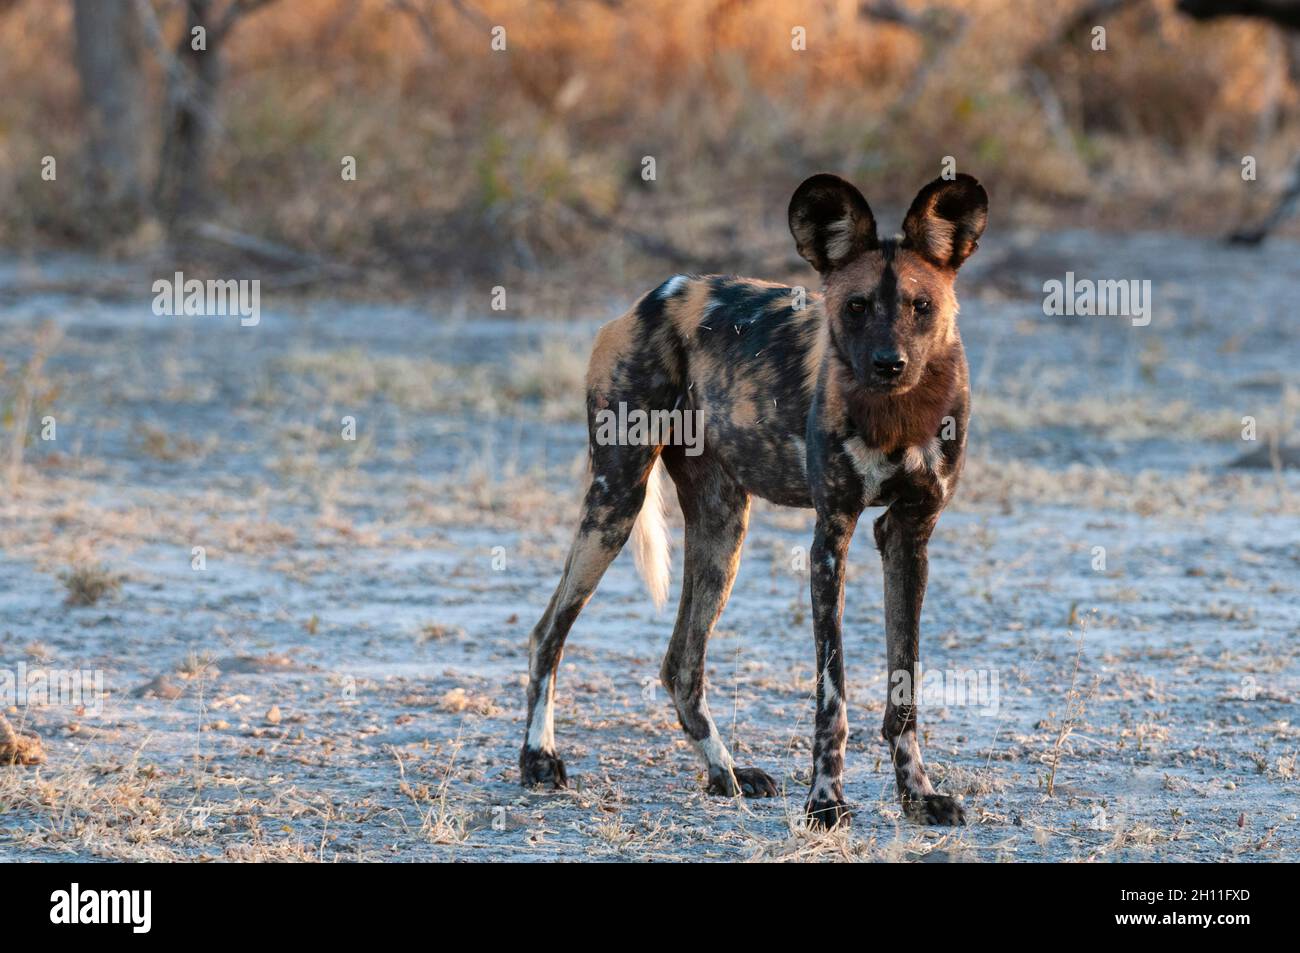 Porträt eines bedrohten afrikanischen Wildhundes Kap-Jagdhundes oder gemalter Wolf, Lycaon pictus. Nxai Pan National Park, Botswana. Stockfoto